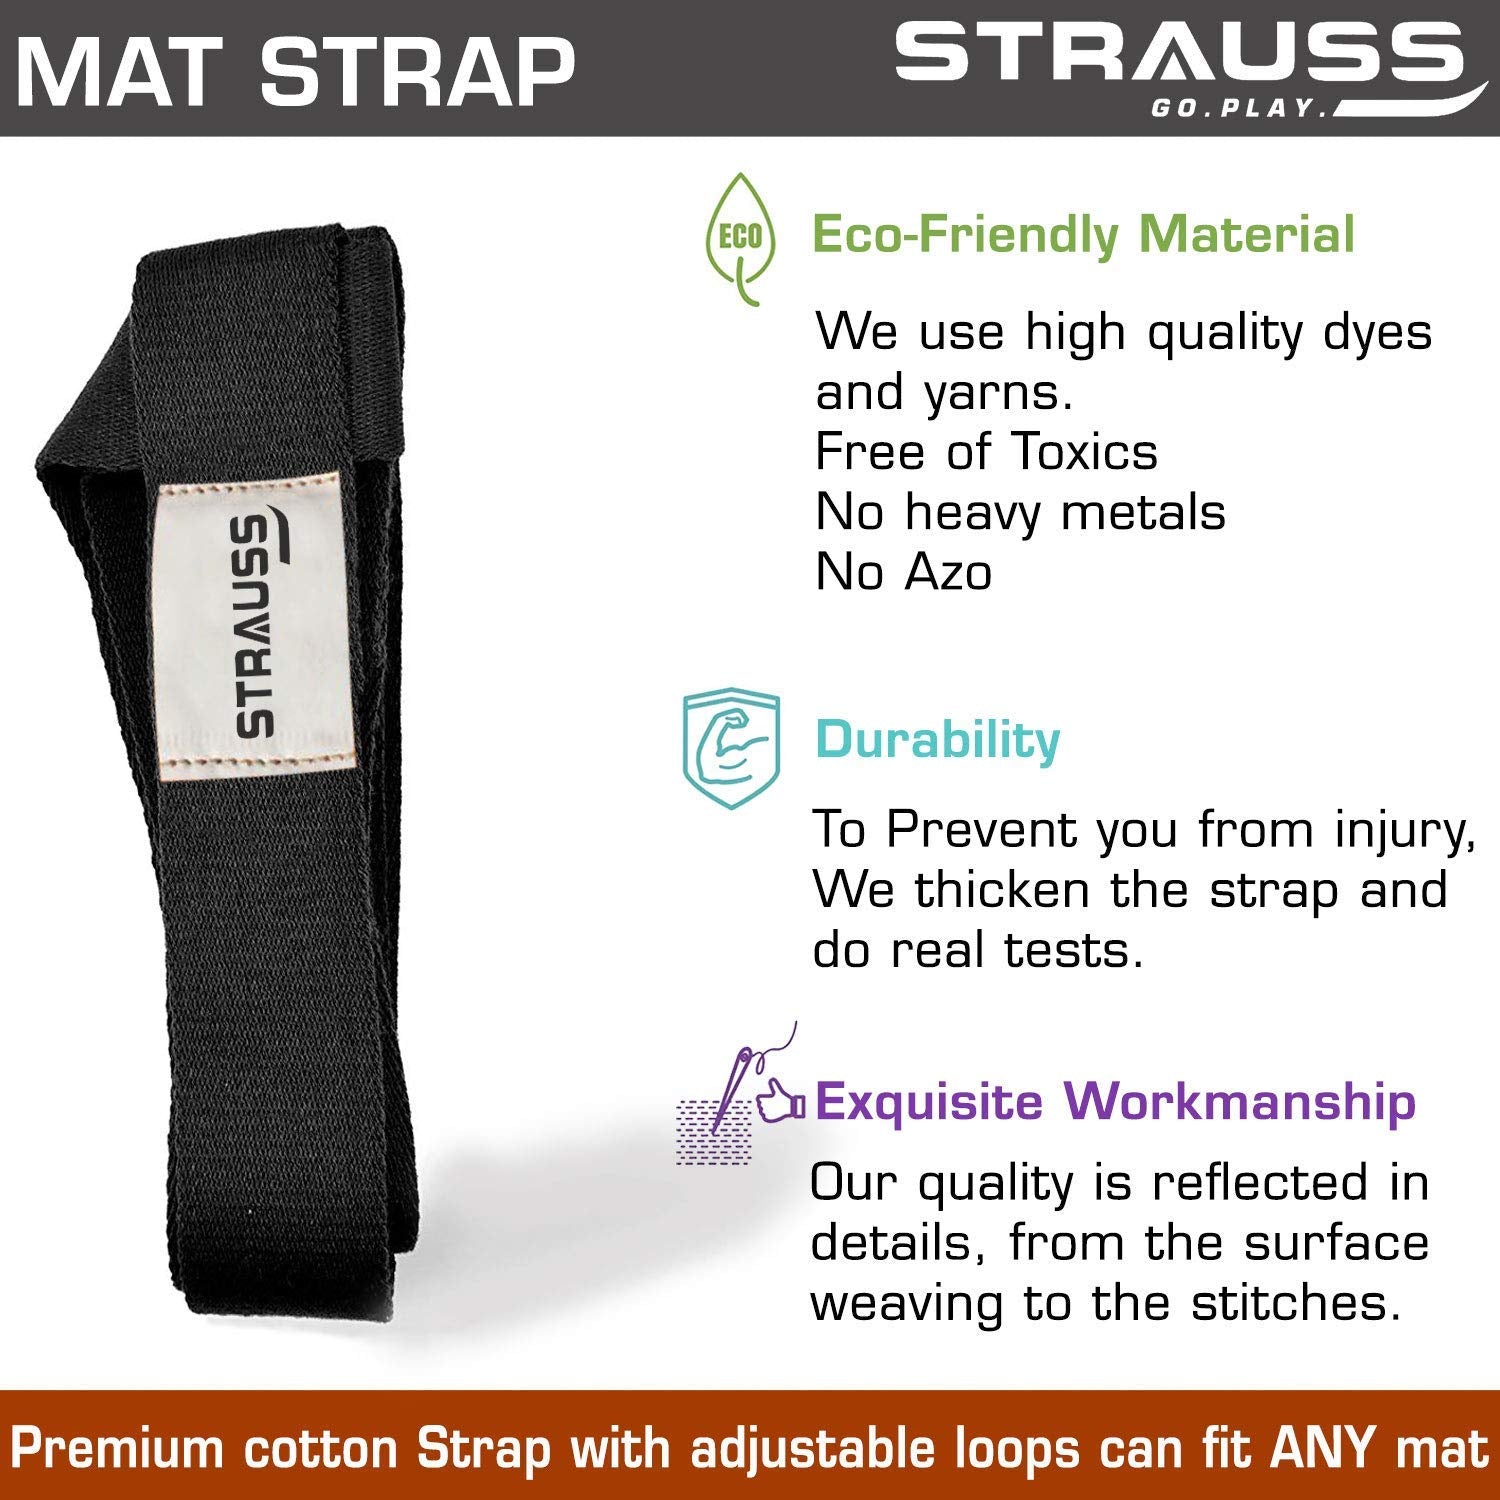 Strauss Yoga Mat (Floral) 10 MM NBR, Yoga Block (Purple) Pair and Yoga Belt (Blue)